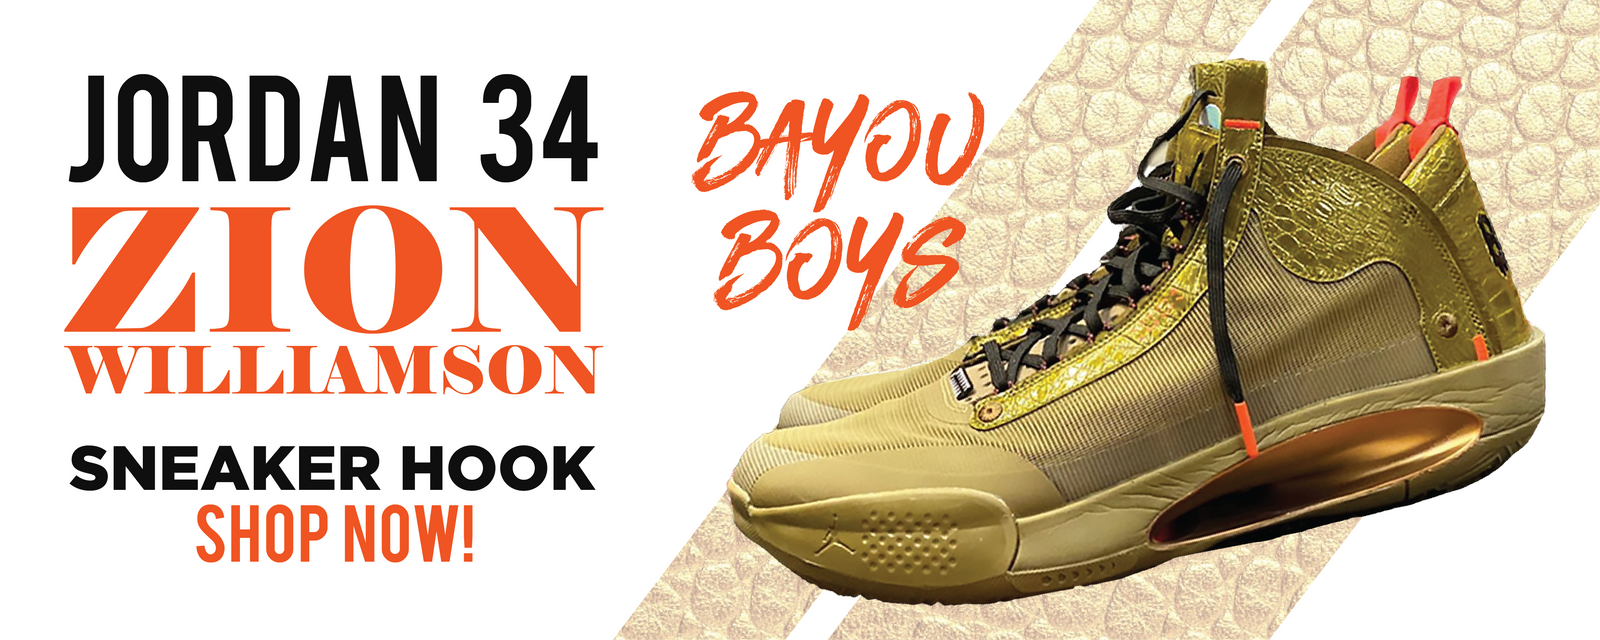 zion williamson shoe bayou